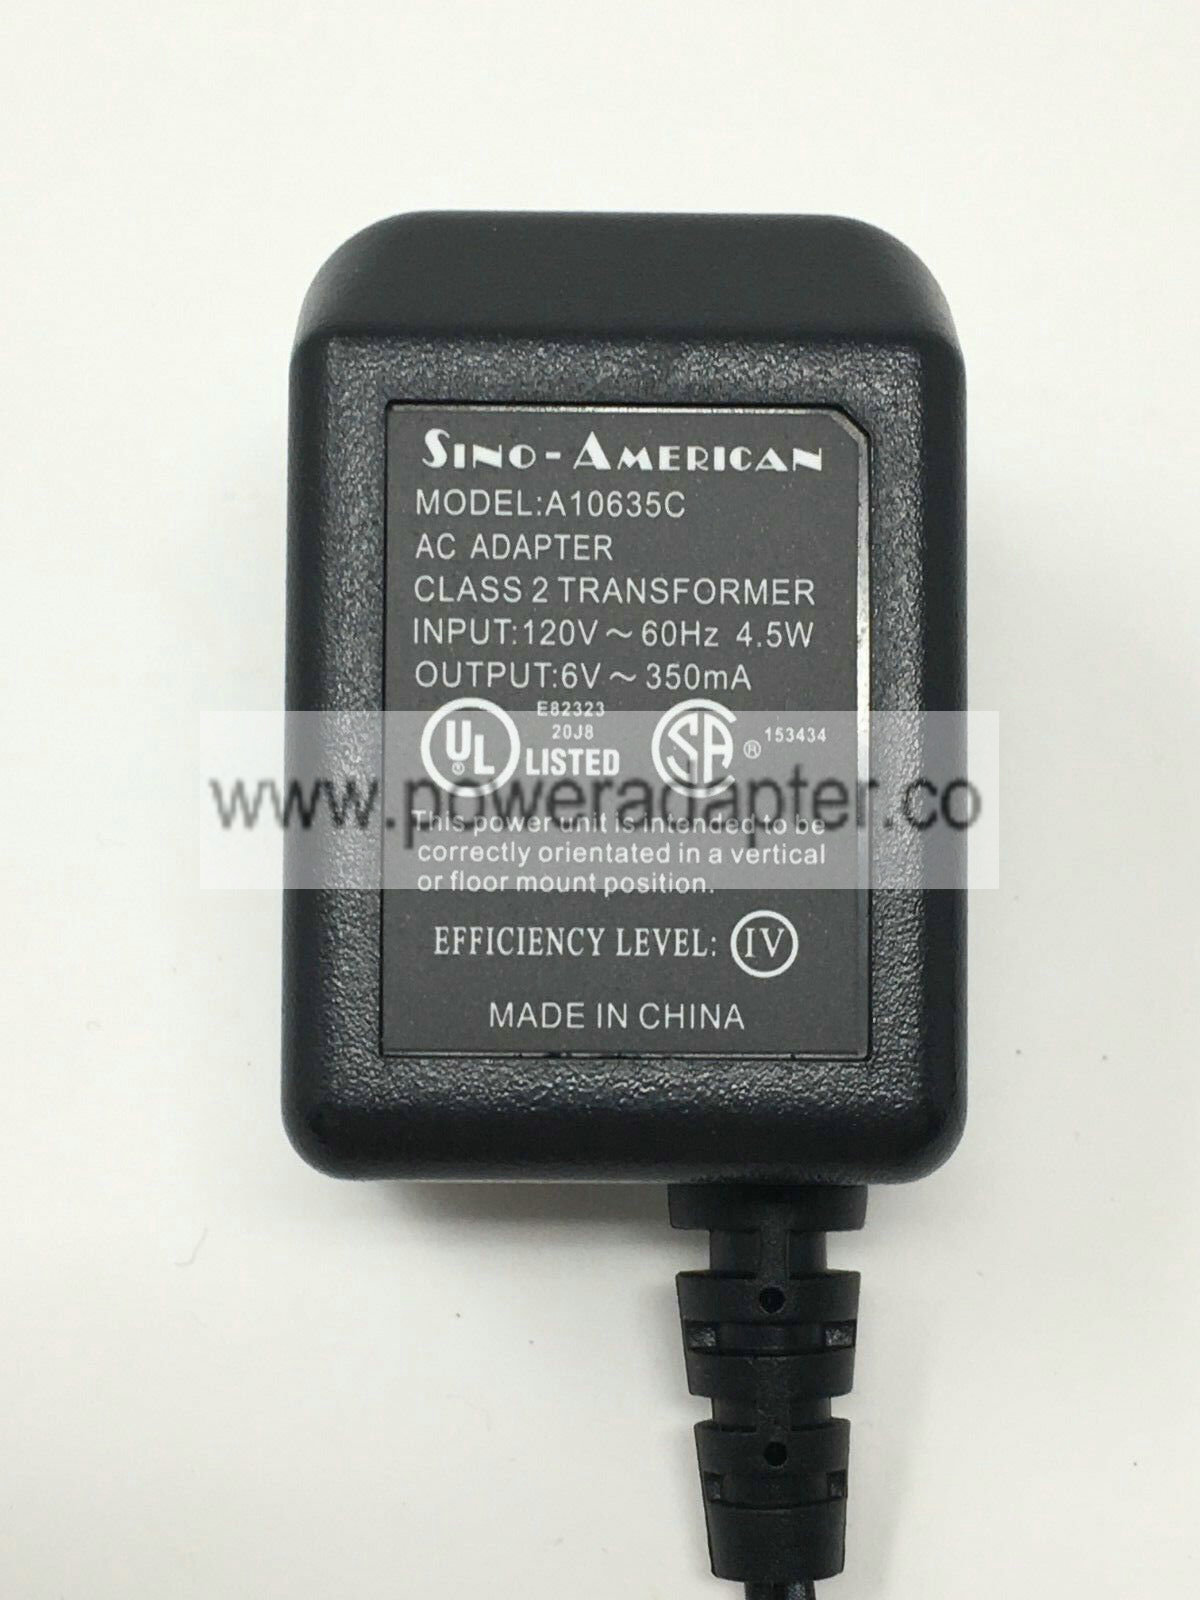 Sino-American AC Adapter Input 120V 60Hz 4.5W Output 6V 350mA For sale is a Sino-American AC Adapter Input 120V 60Hz